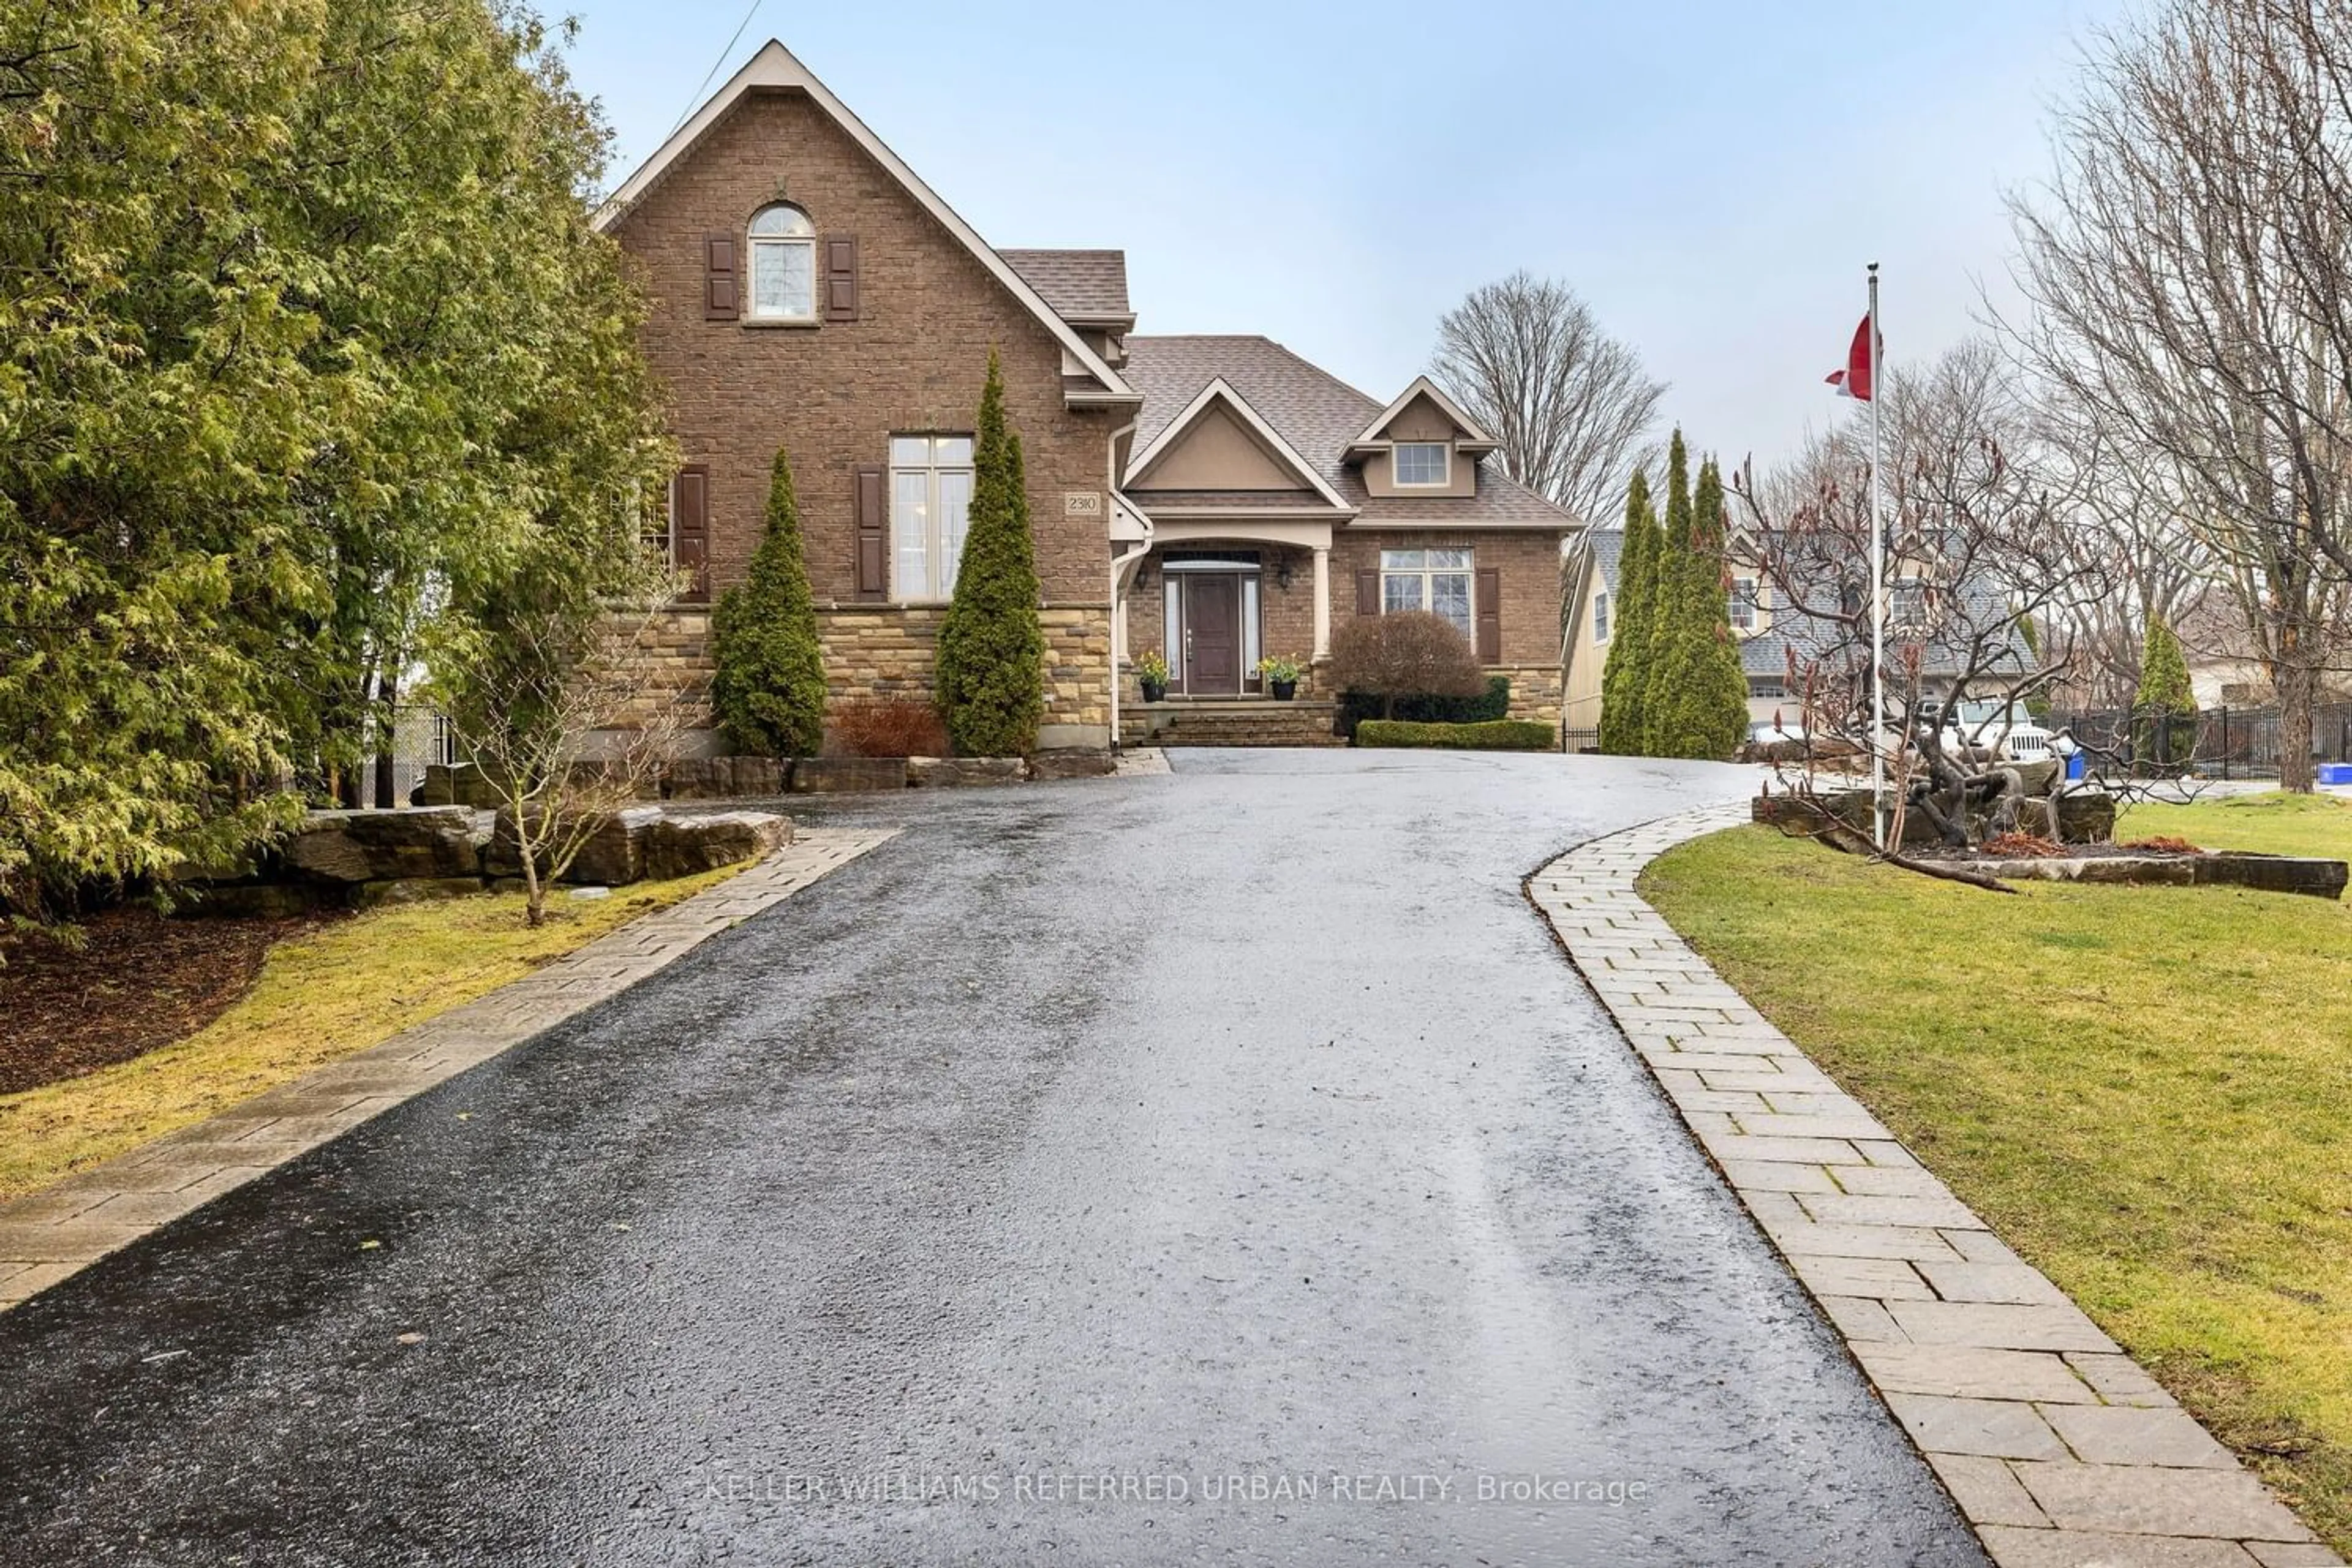 Home with brick exterior material for 2310 Prestonvale Rd, Clarington Ontario L1E 2S1